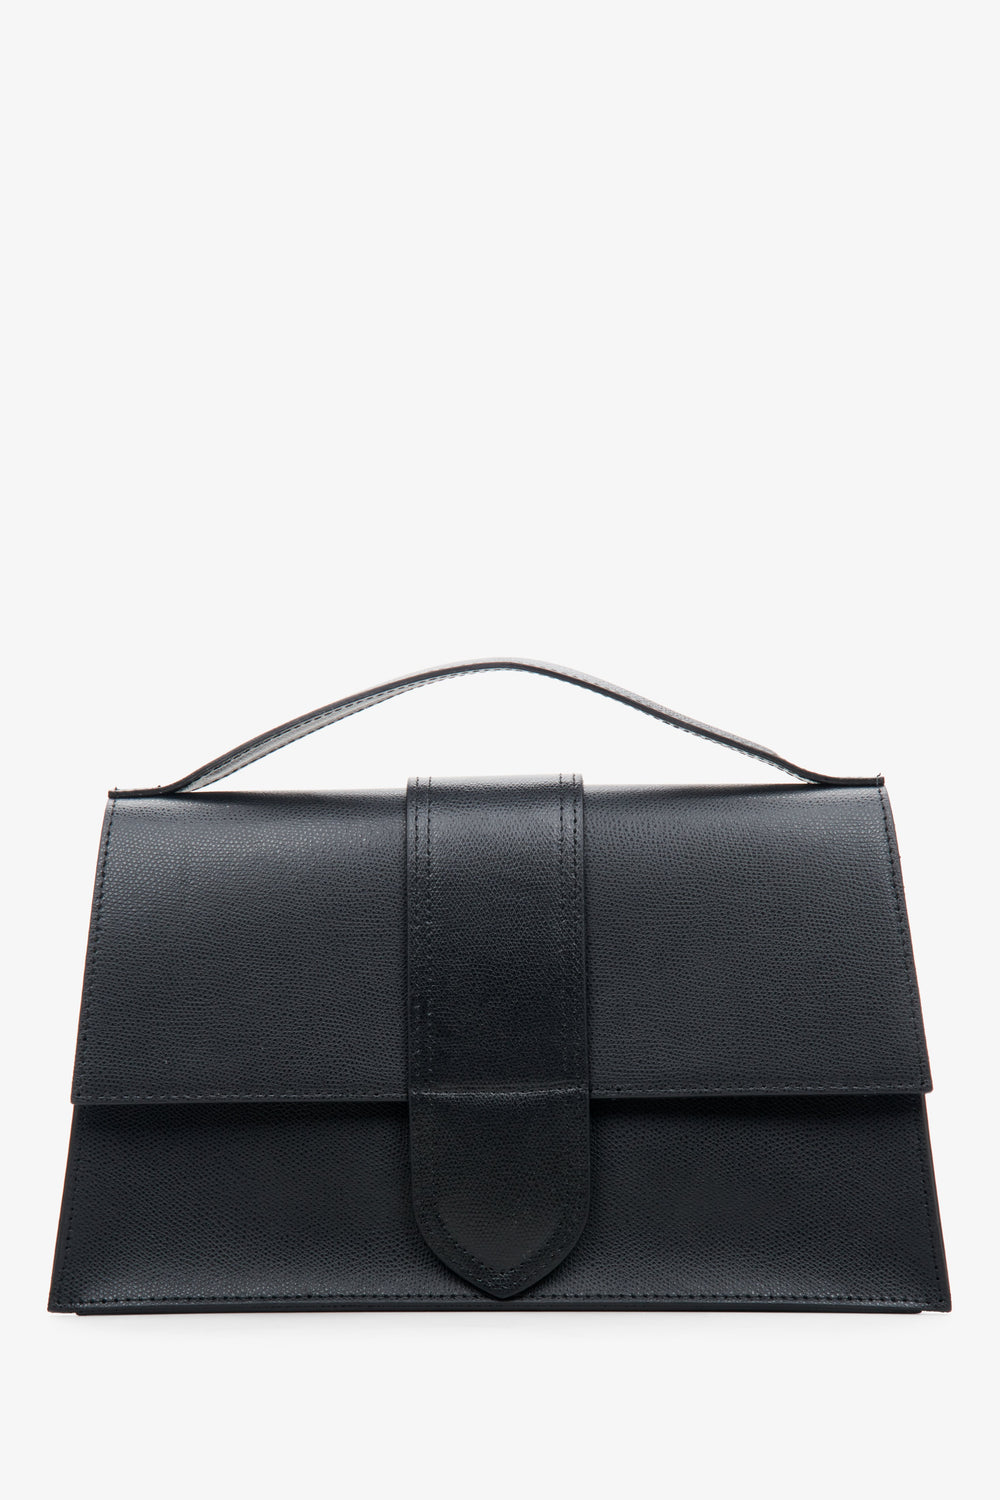 Women's Small Black Flap Handbag made of Italian Genuine Leather Estro ER00114072.